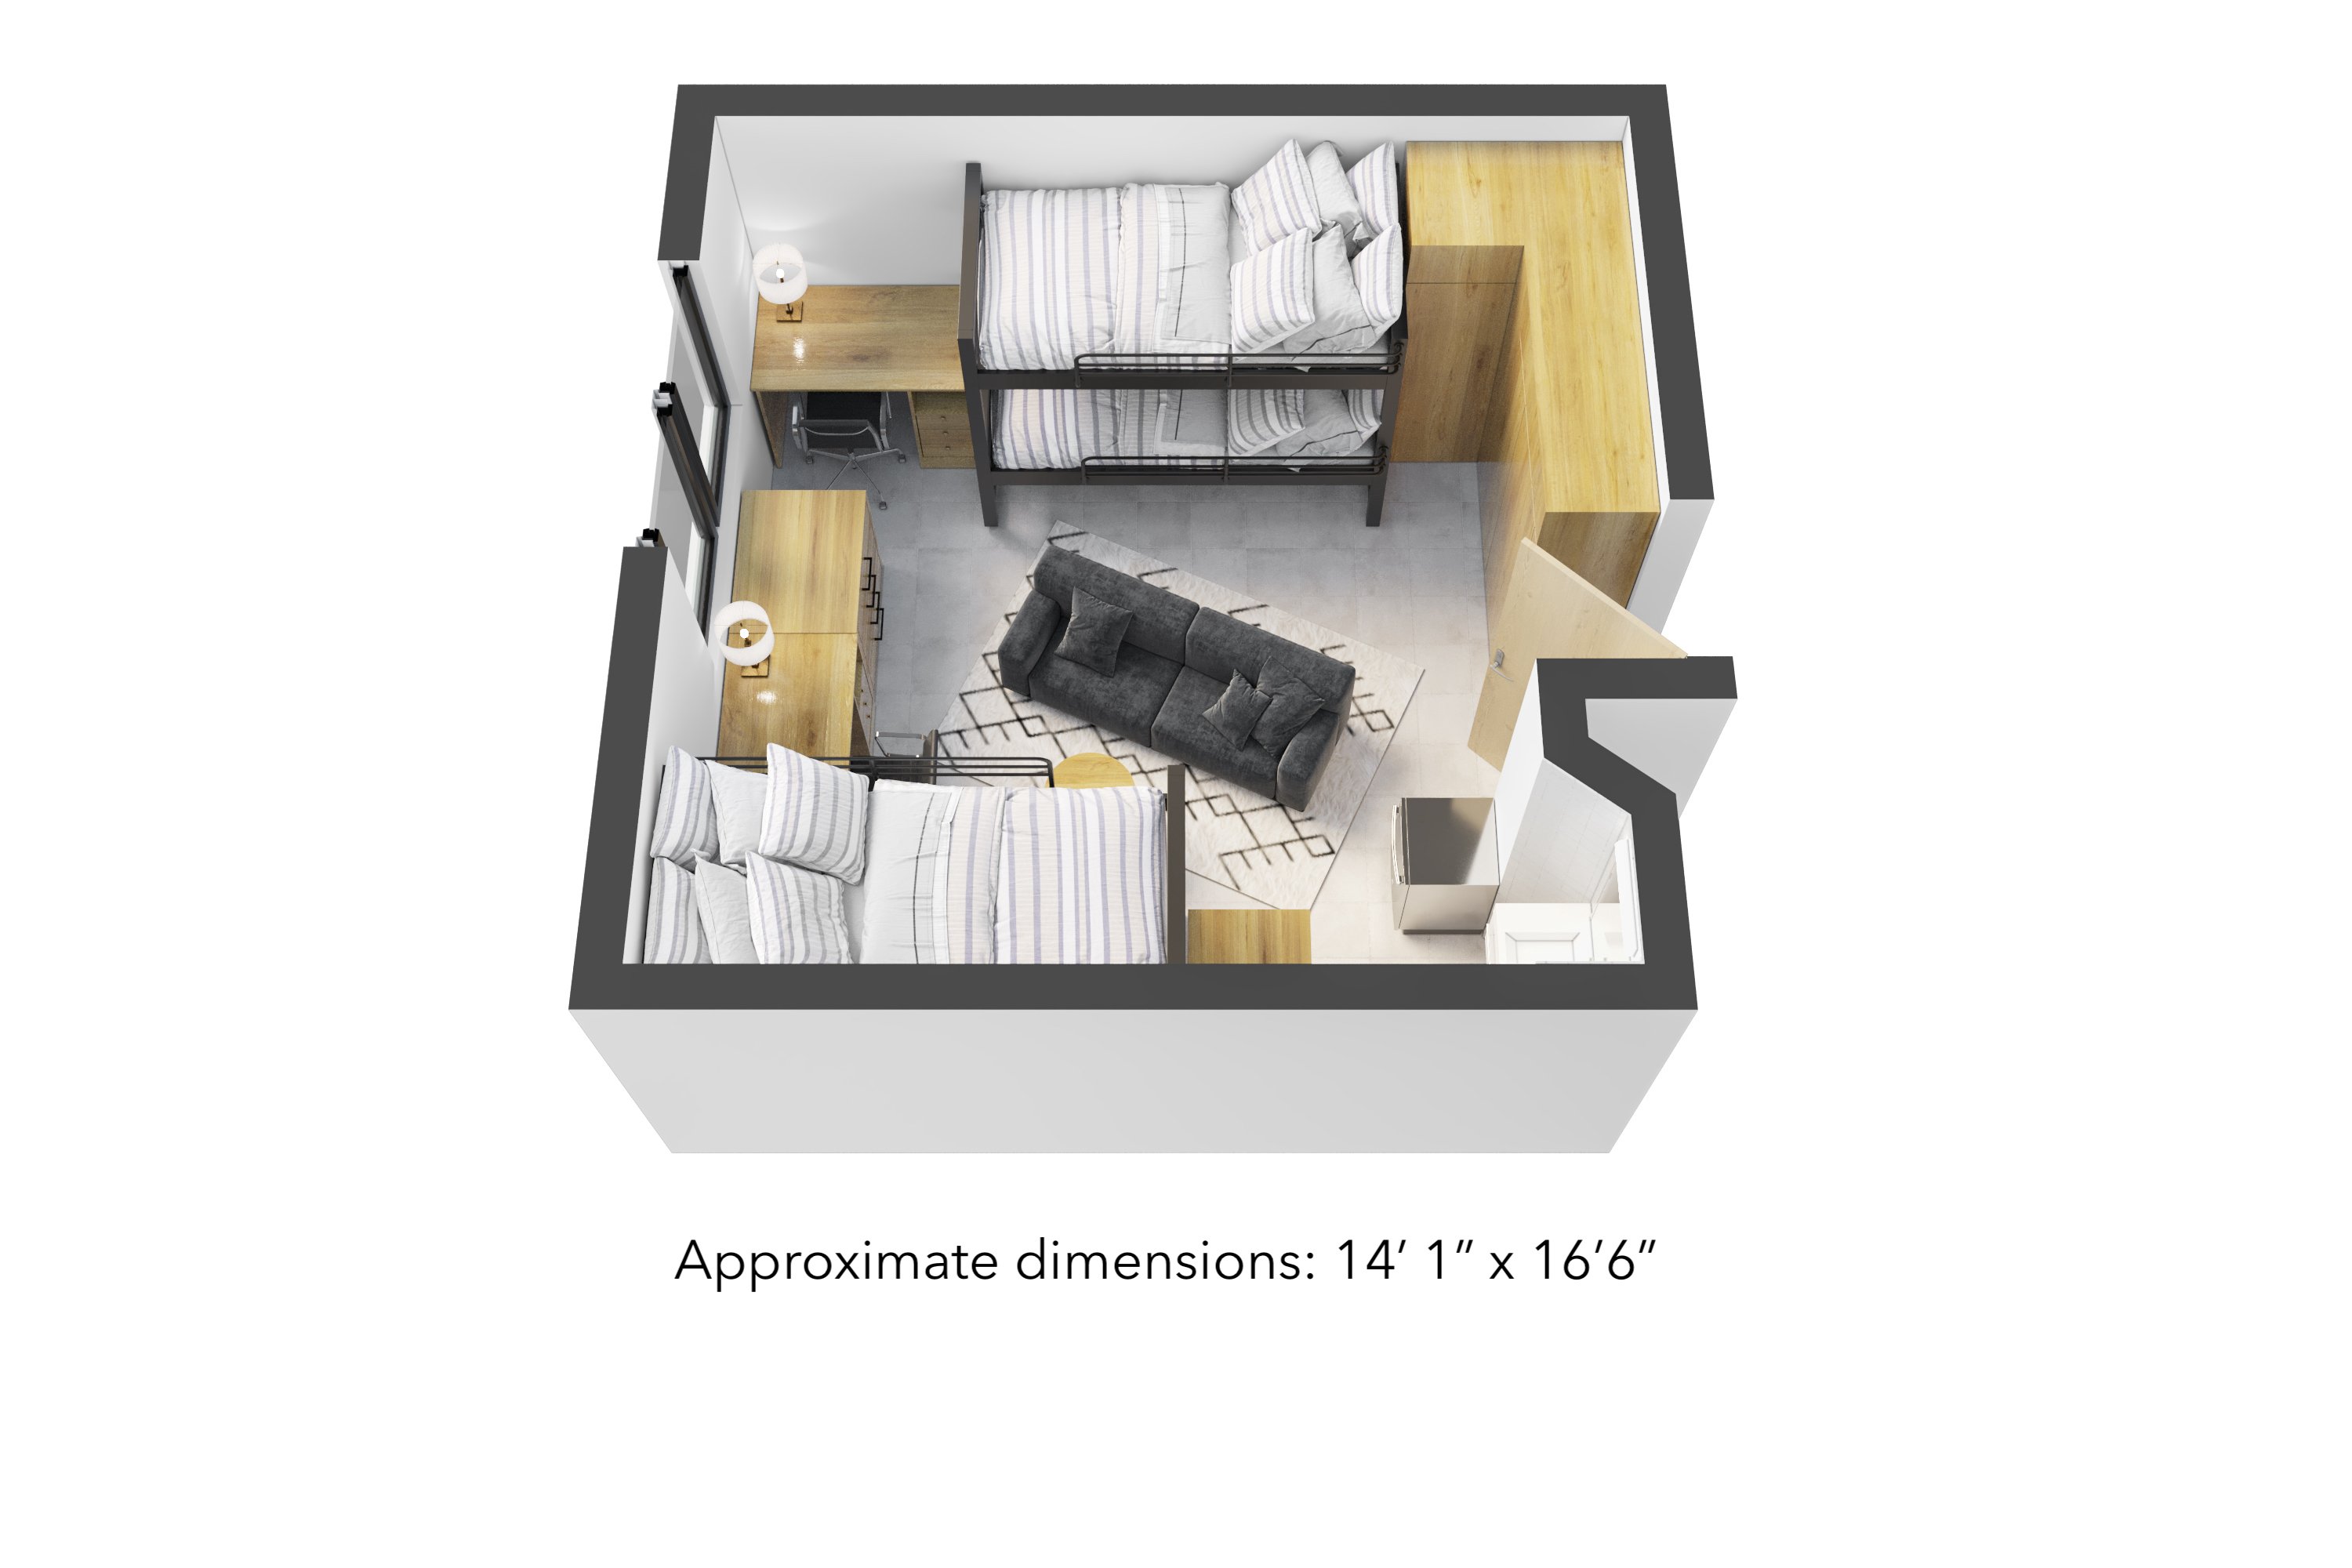 a floor plan of a room